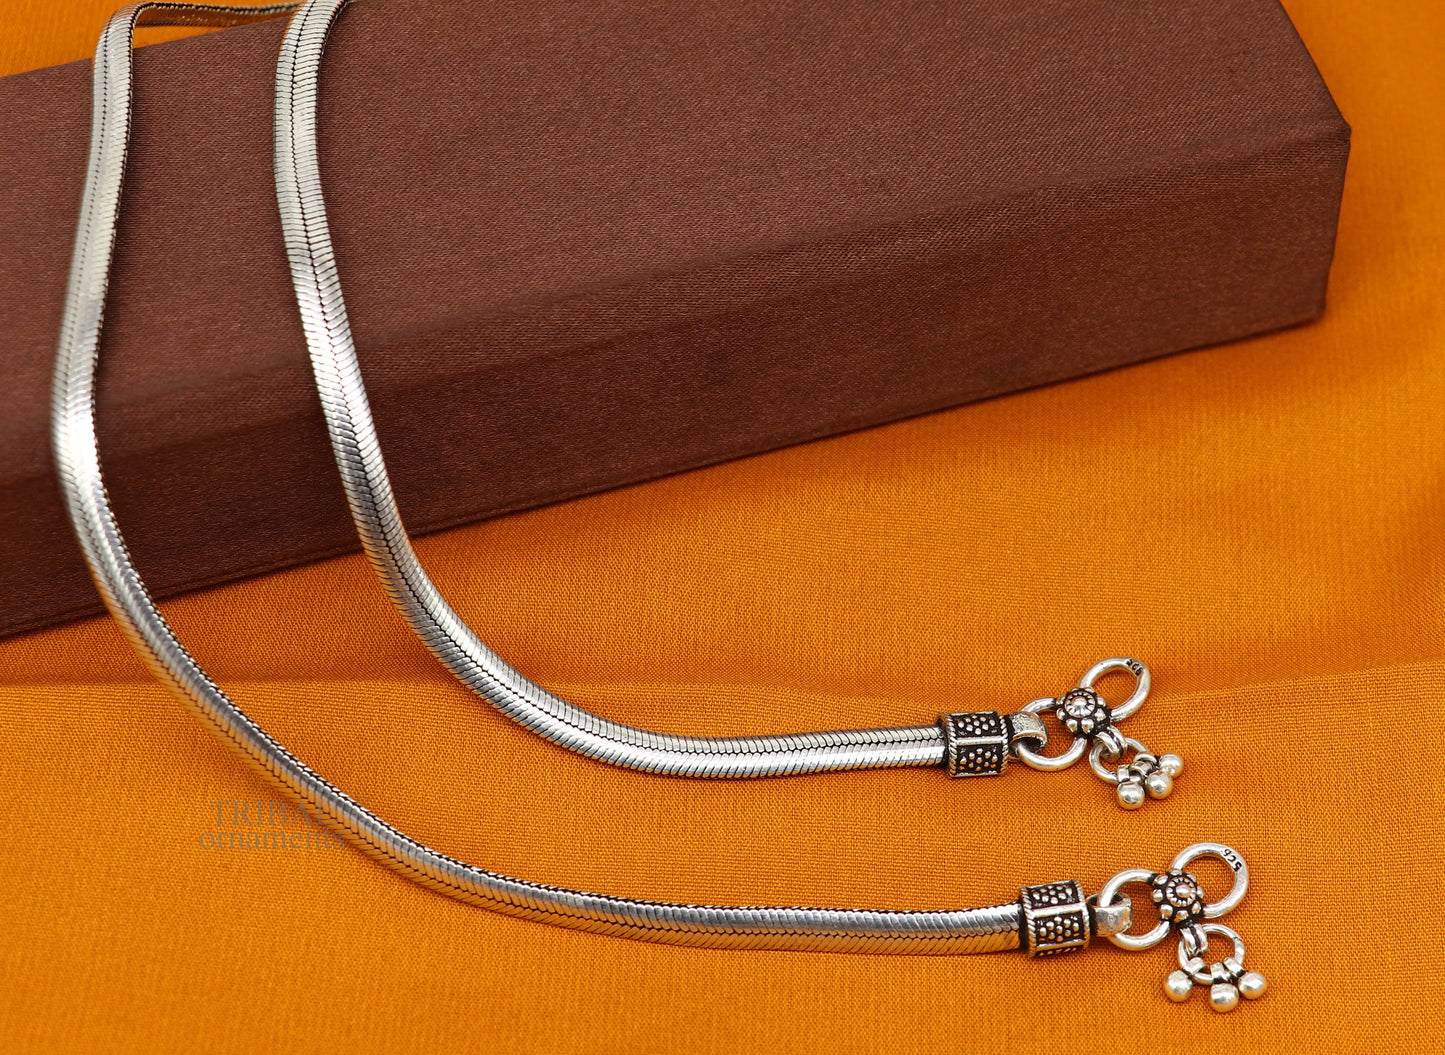 925 sterling silver snake chain ankle bracelet, excellent customized trendy stylish anklets foot bracelet belly dance jewelry nank426 - TRIBAL ORNAMENTS